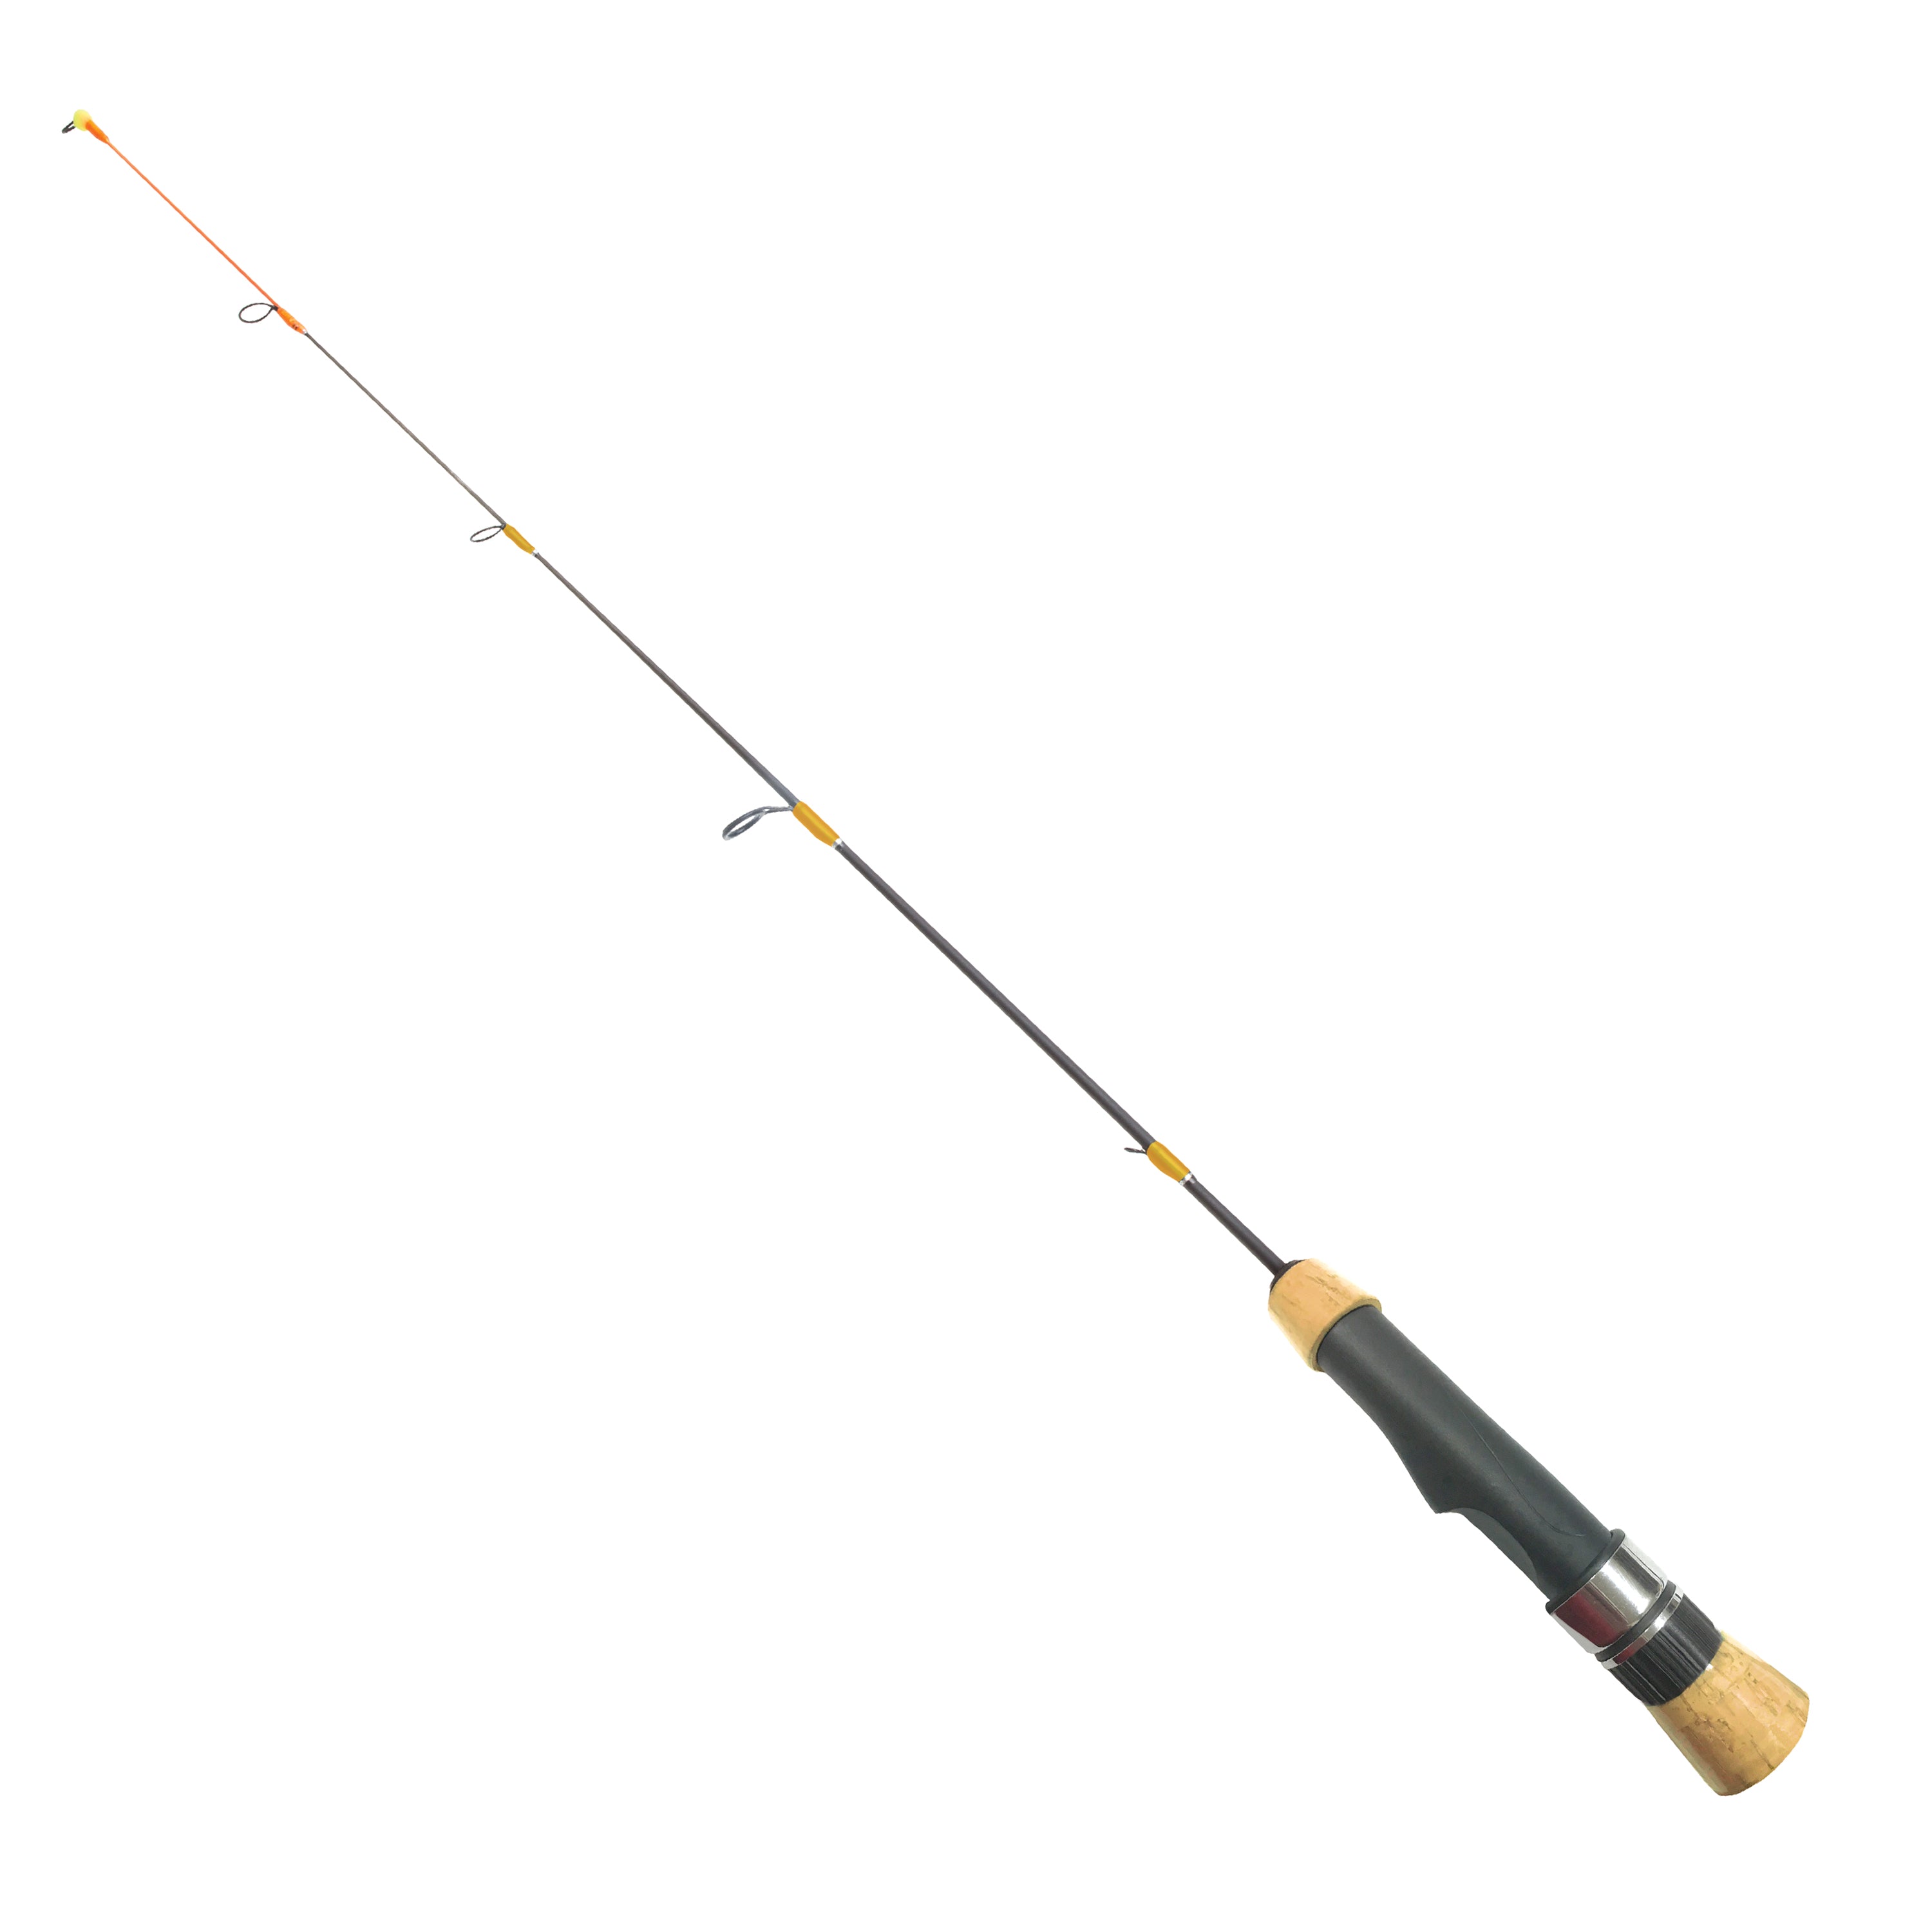 fishing rod handles - Google Search  Ice fishing rods, Fishing tips, Ice  fishing